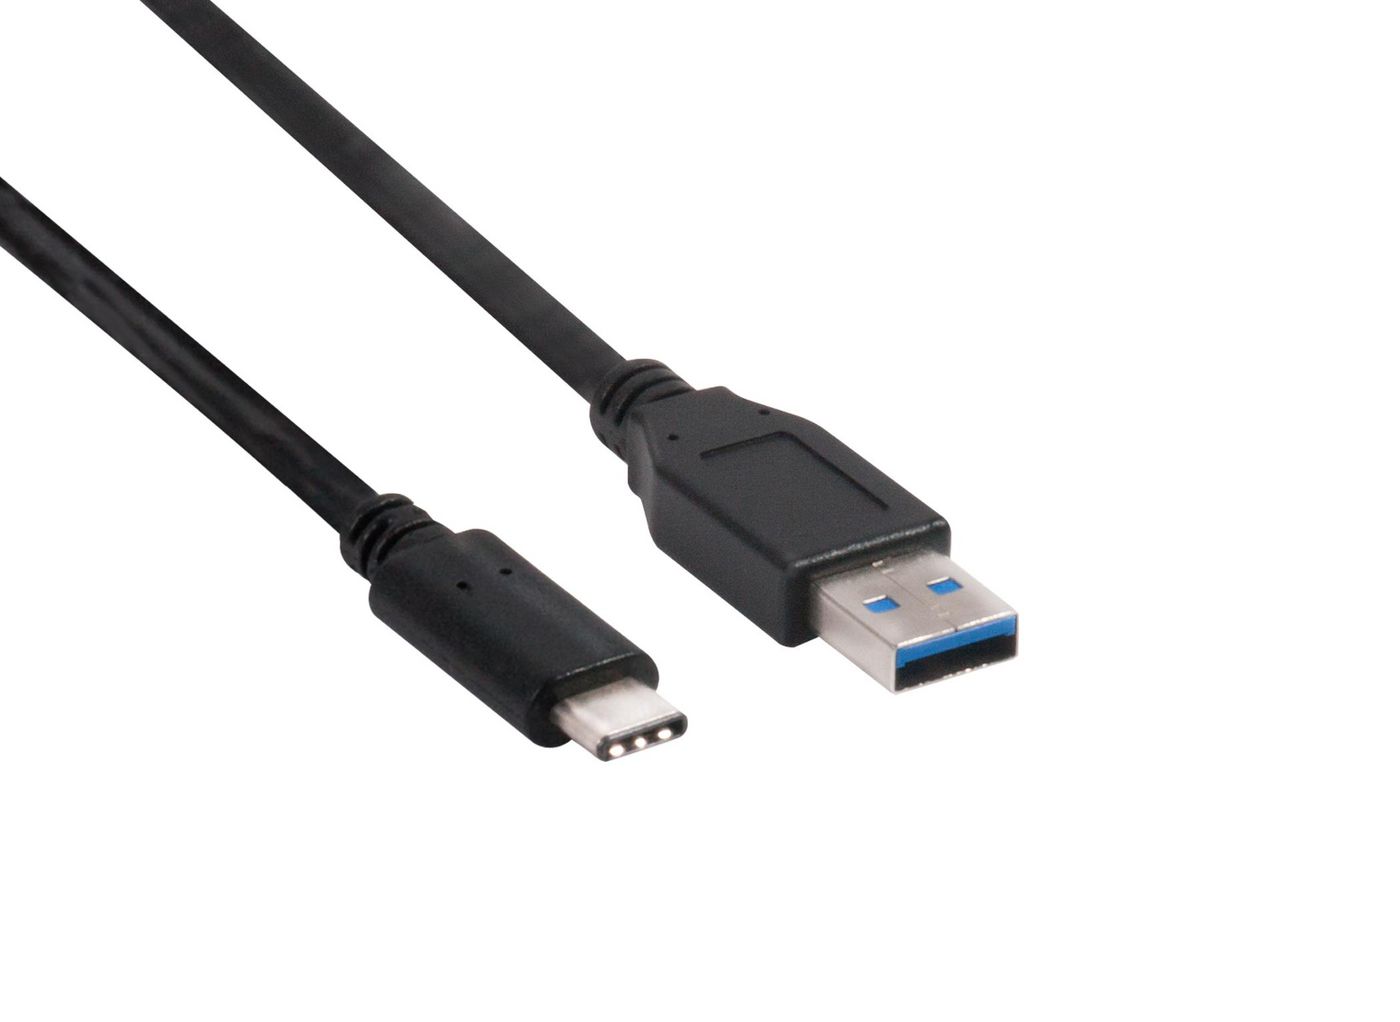 Club3D USB 3.1 Typ C Anschlusskabel > Typ A PowerDeliv.St/St retail